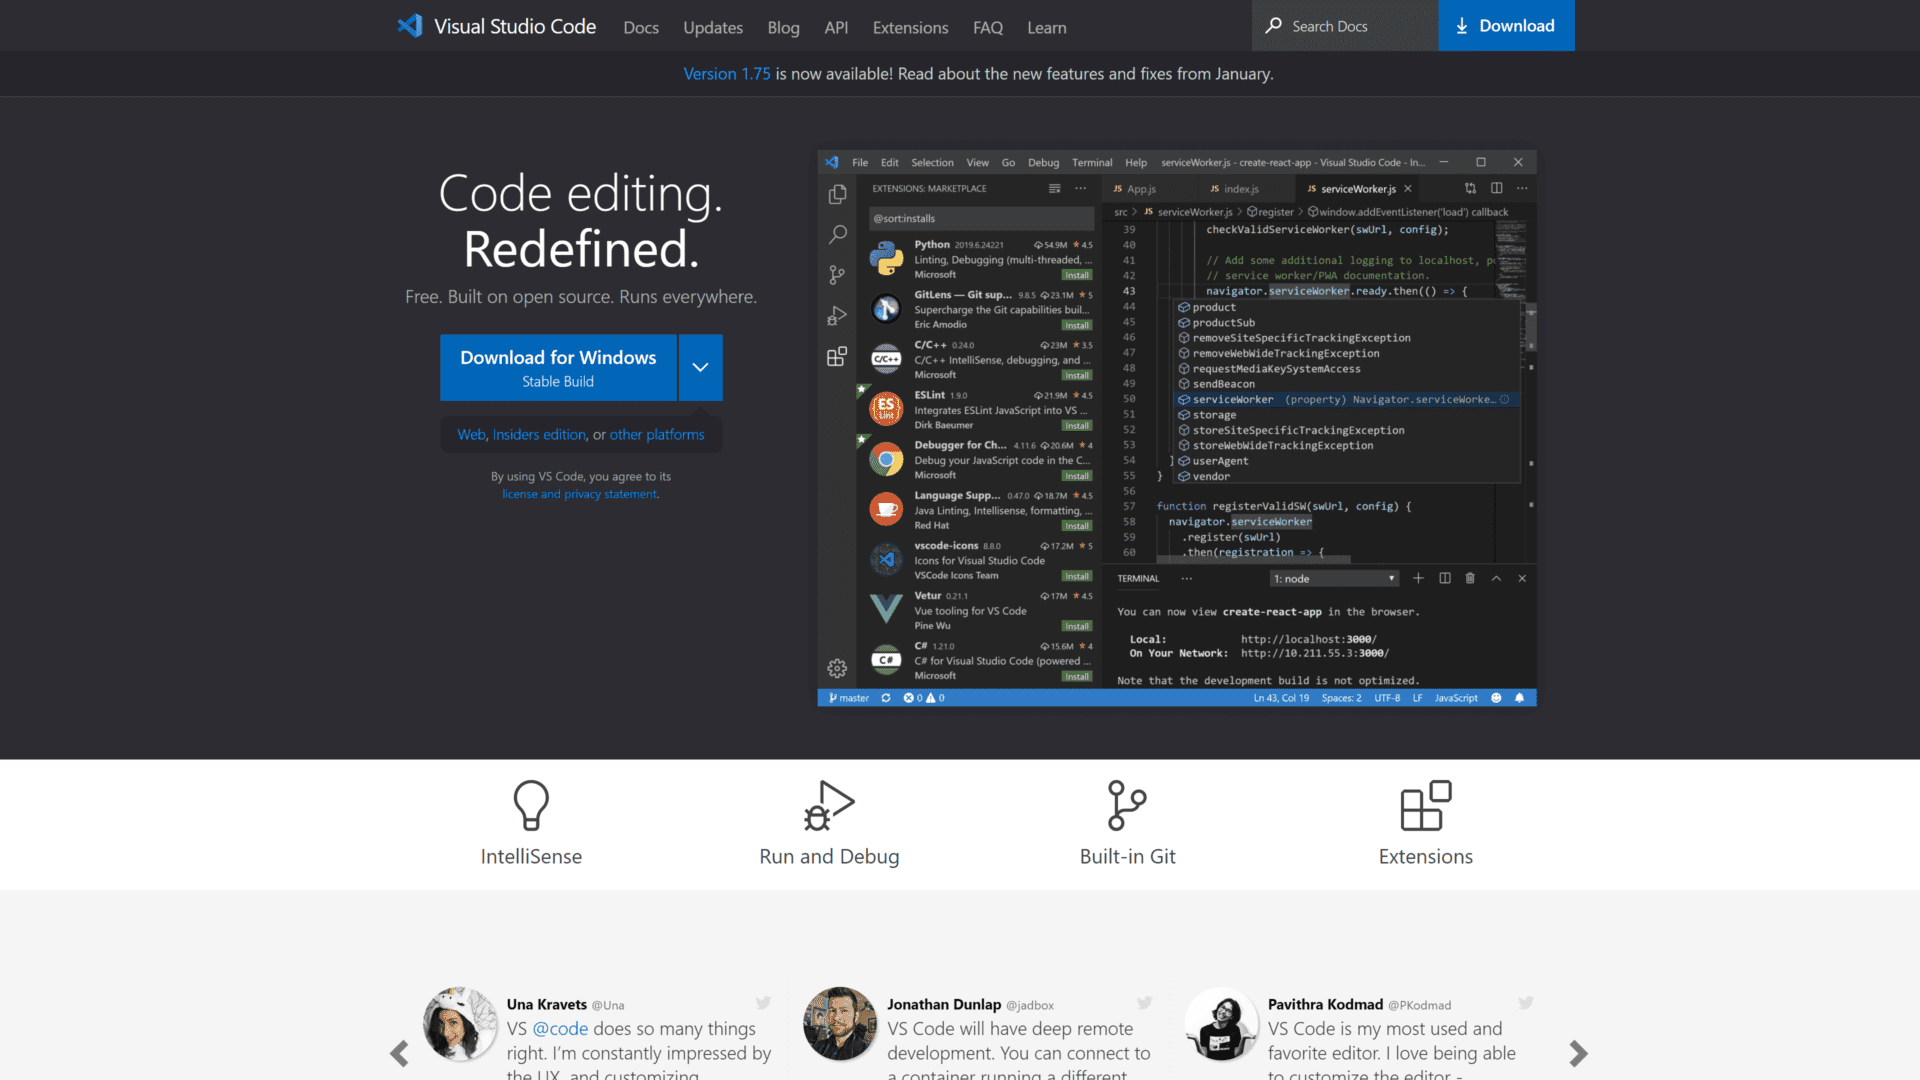 screenshot of the visual studio code homepage